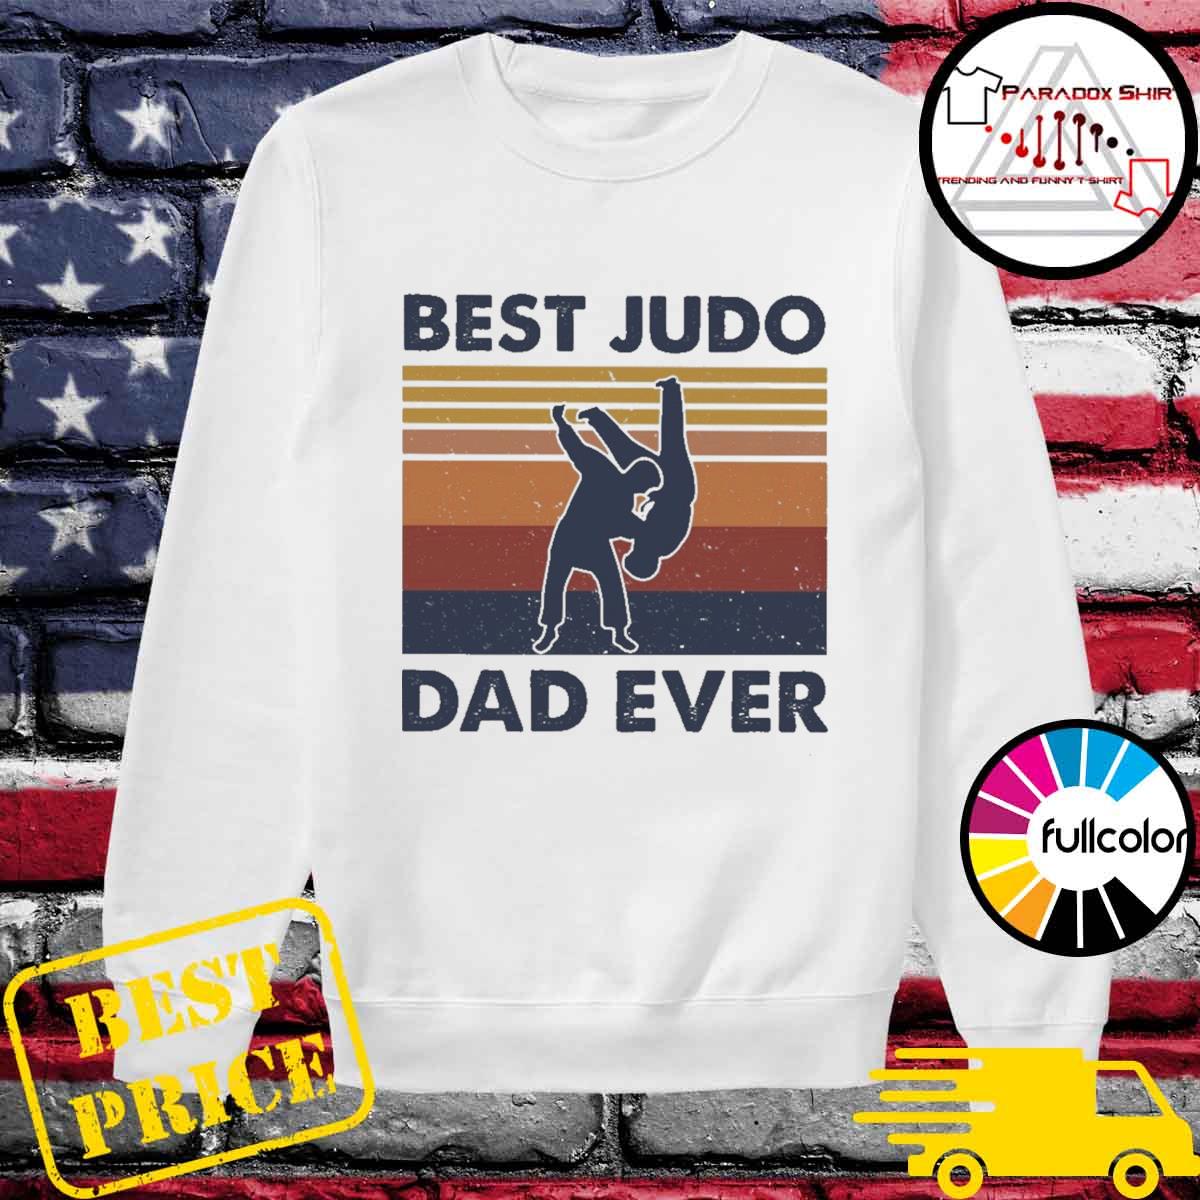 judo dad t shirt 